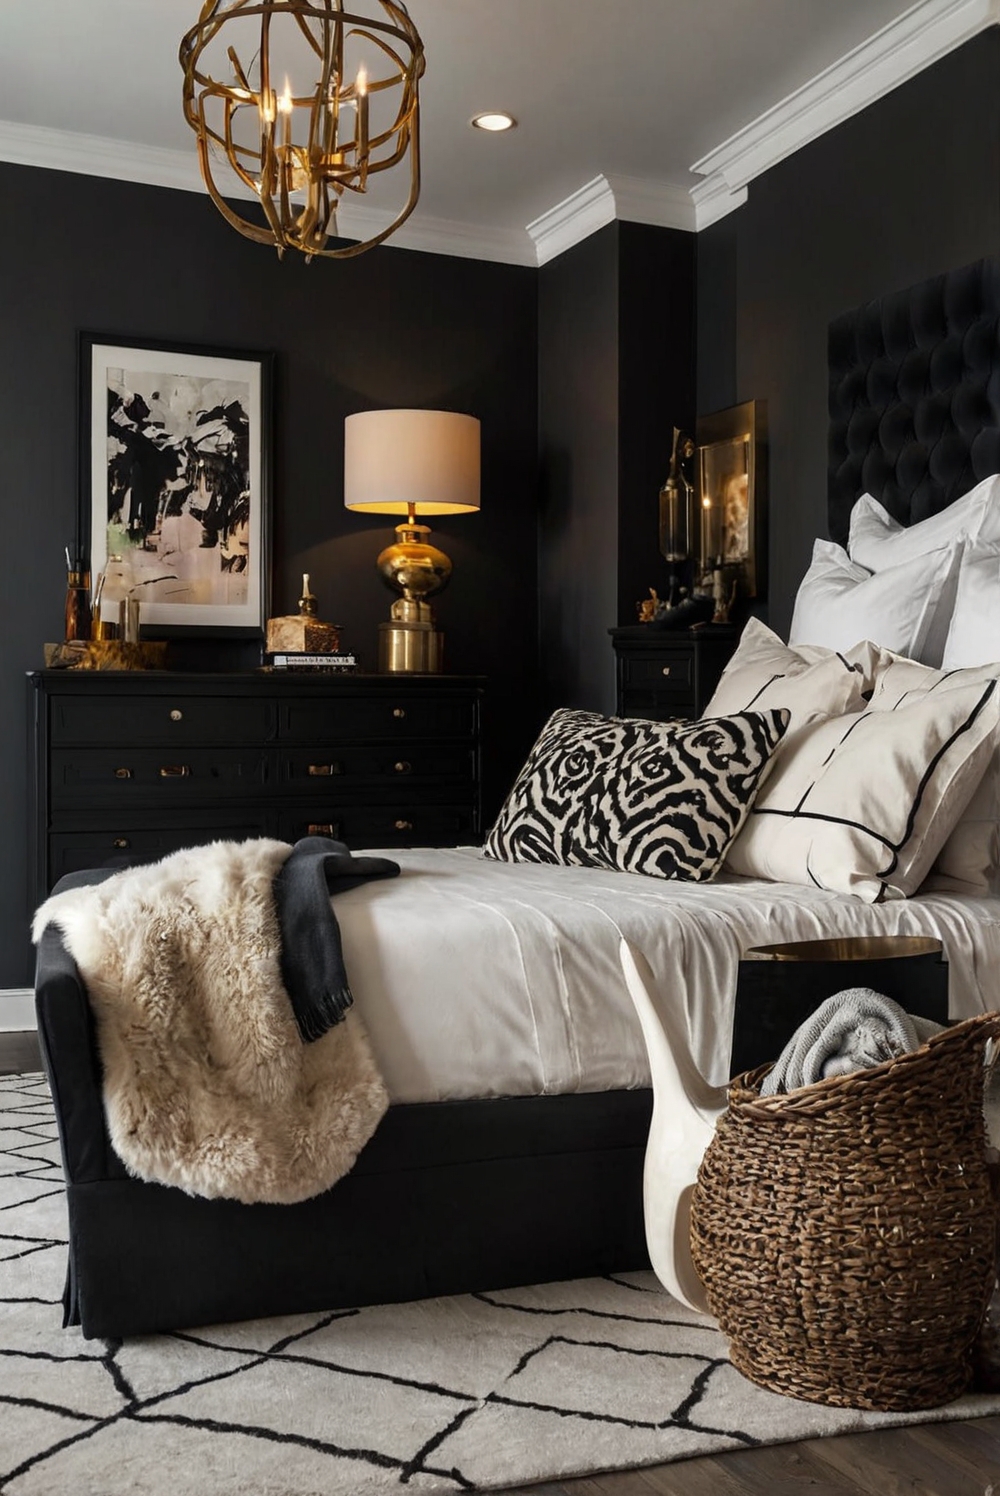 interior design services, luxury home decor, bedroom makeover ideas, upscale furniture